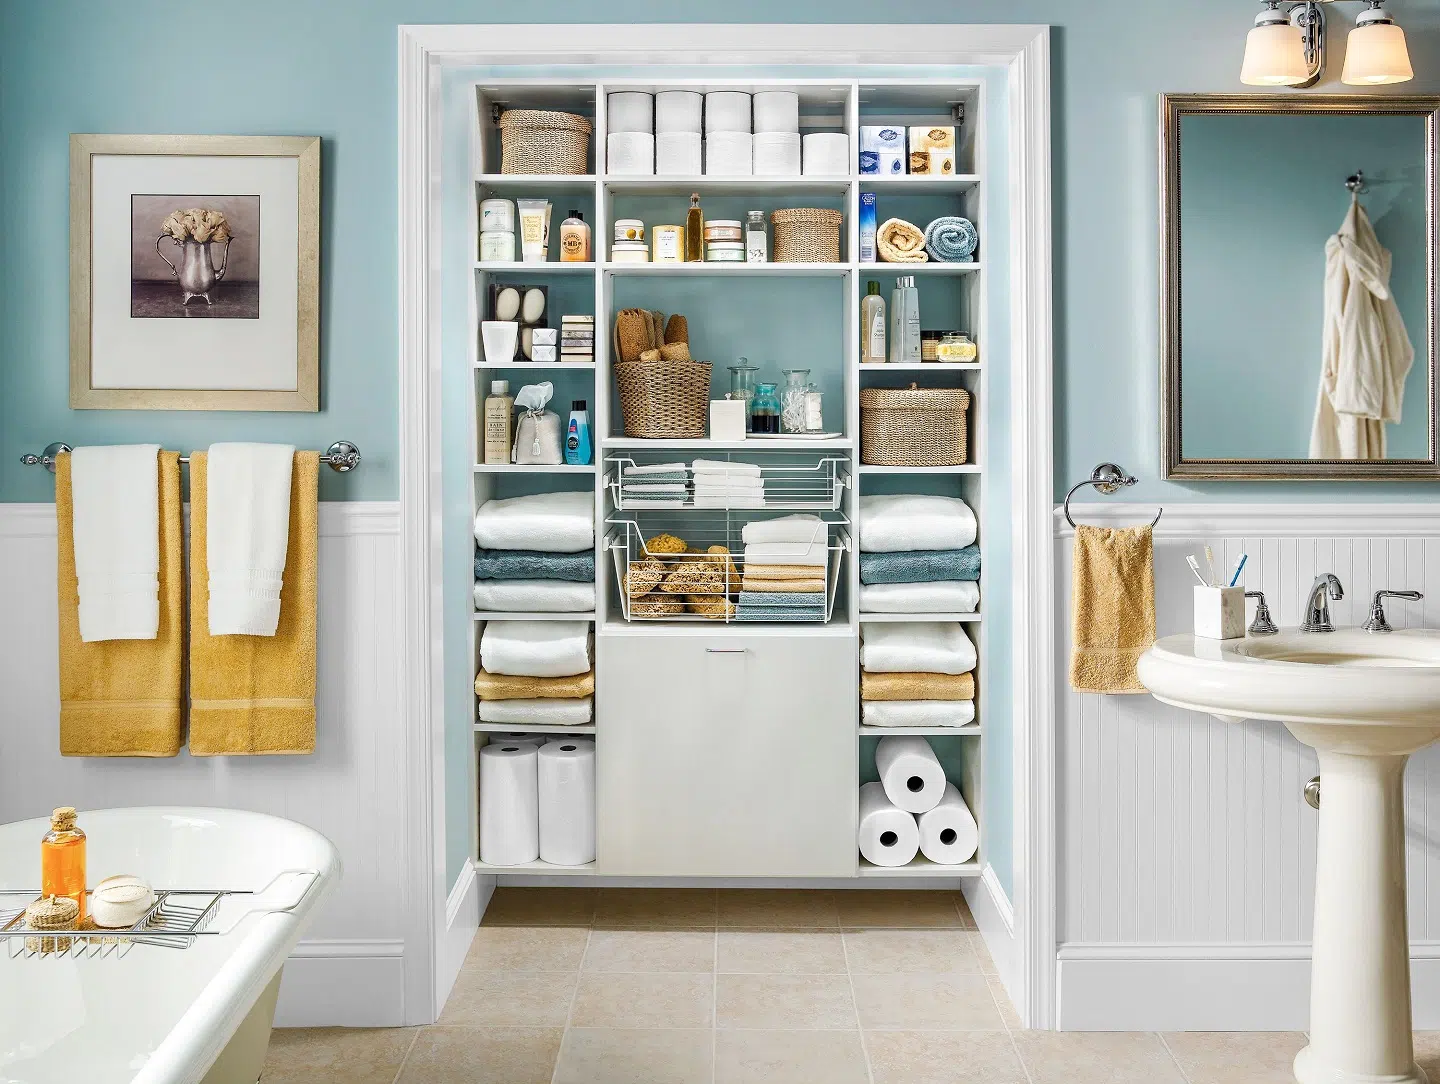 Functionality and Practicality of Bathroom Shelves